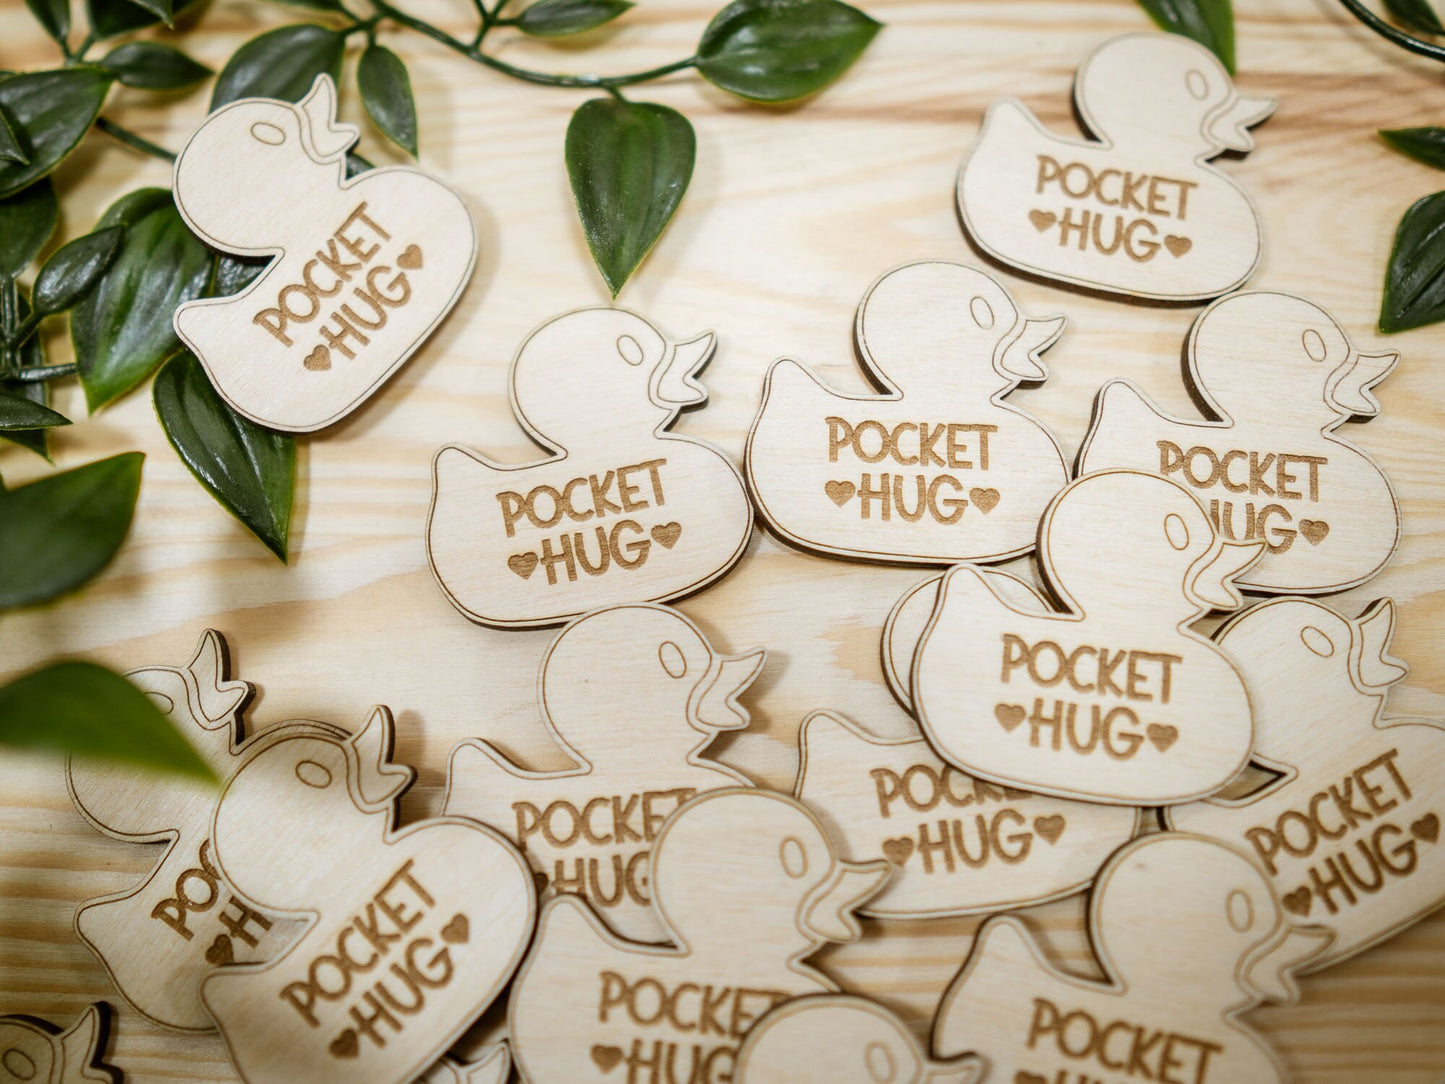 Pocket hugs tokens, little duck hug token, pocket hug wooden, sweet cute engraved love thank you gift, wood talisman, mascot